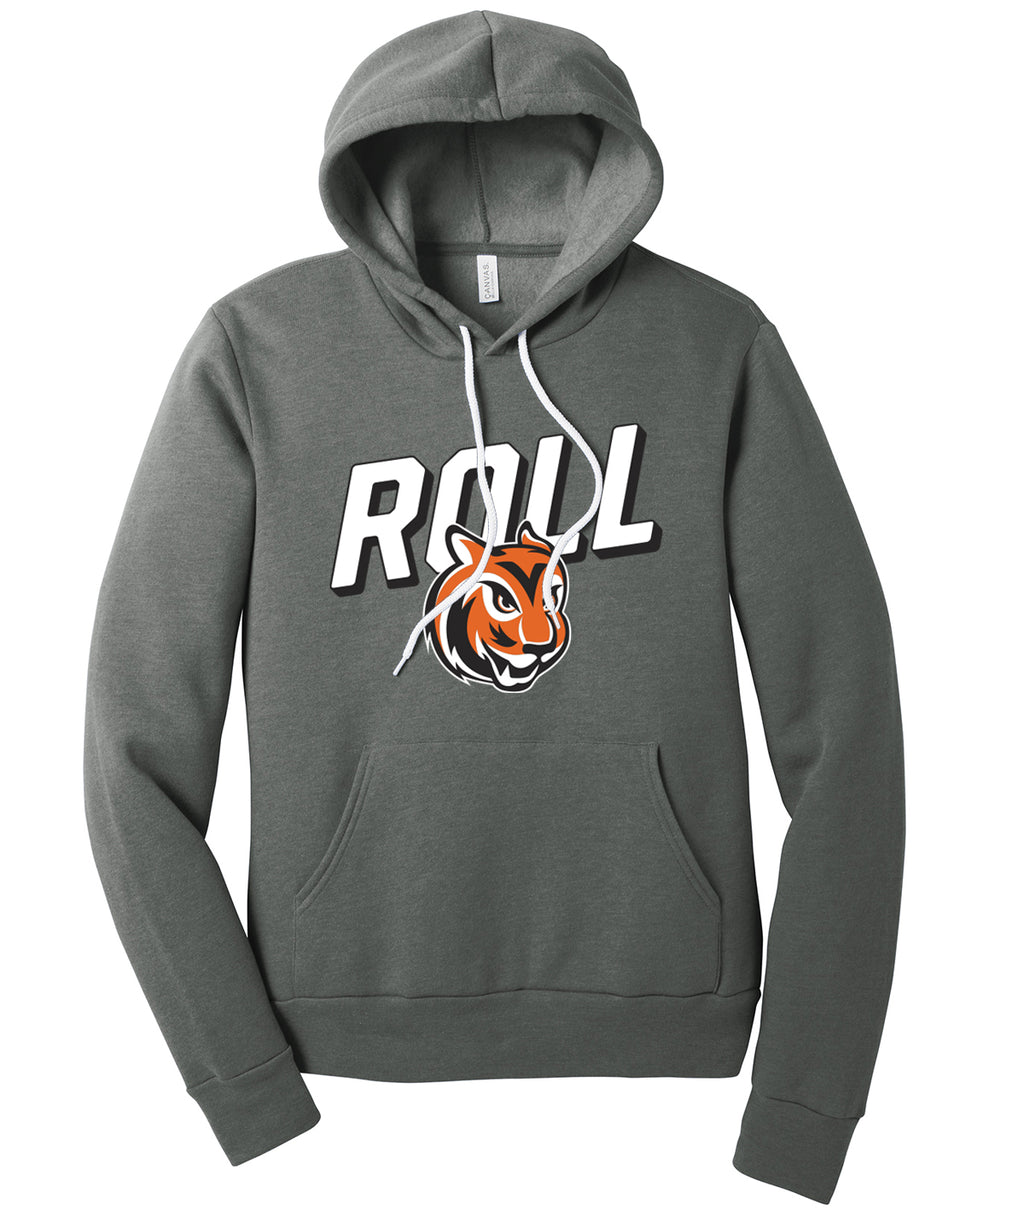 Roll Tigers Fleece Pullover Sweatshirt